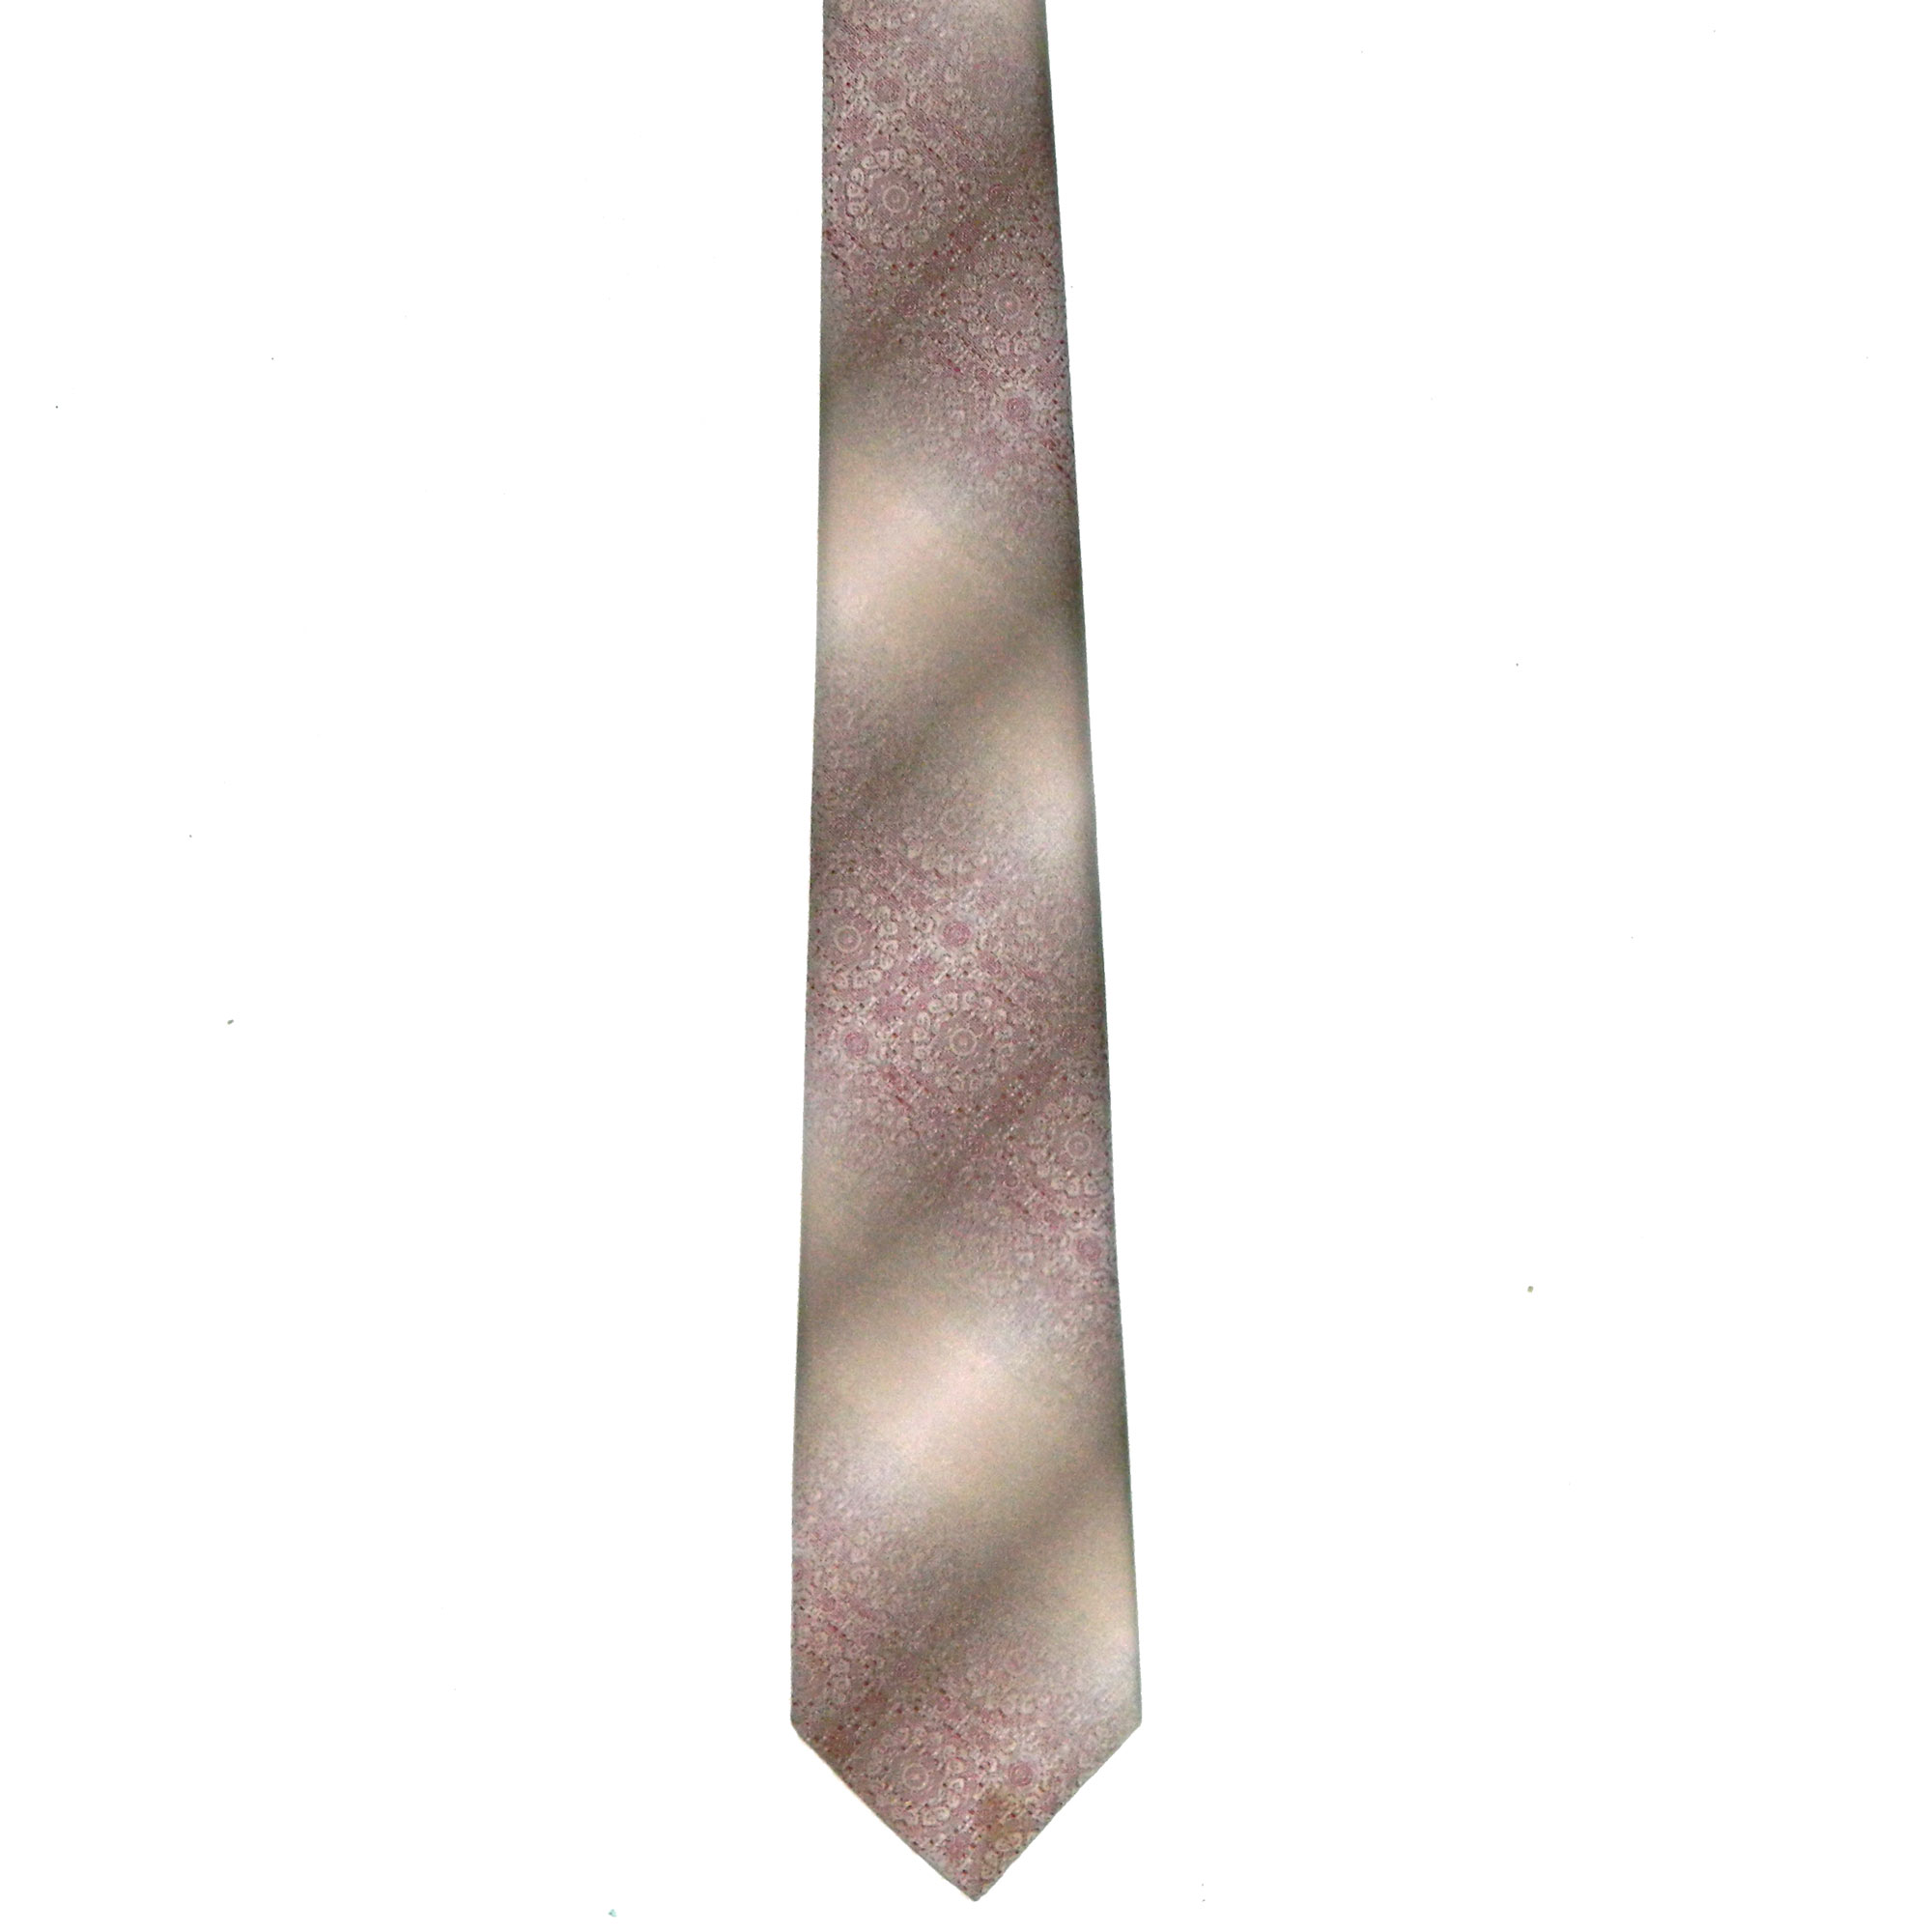 1980s tie